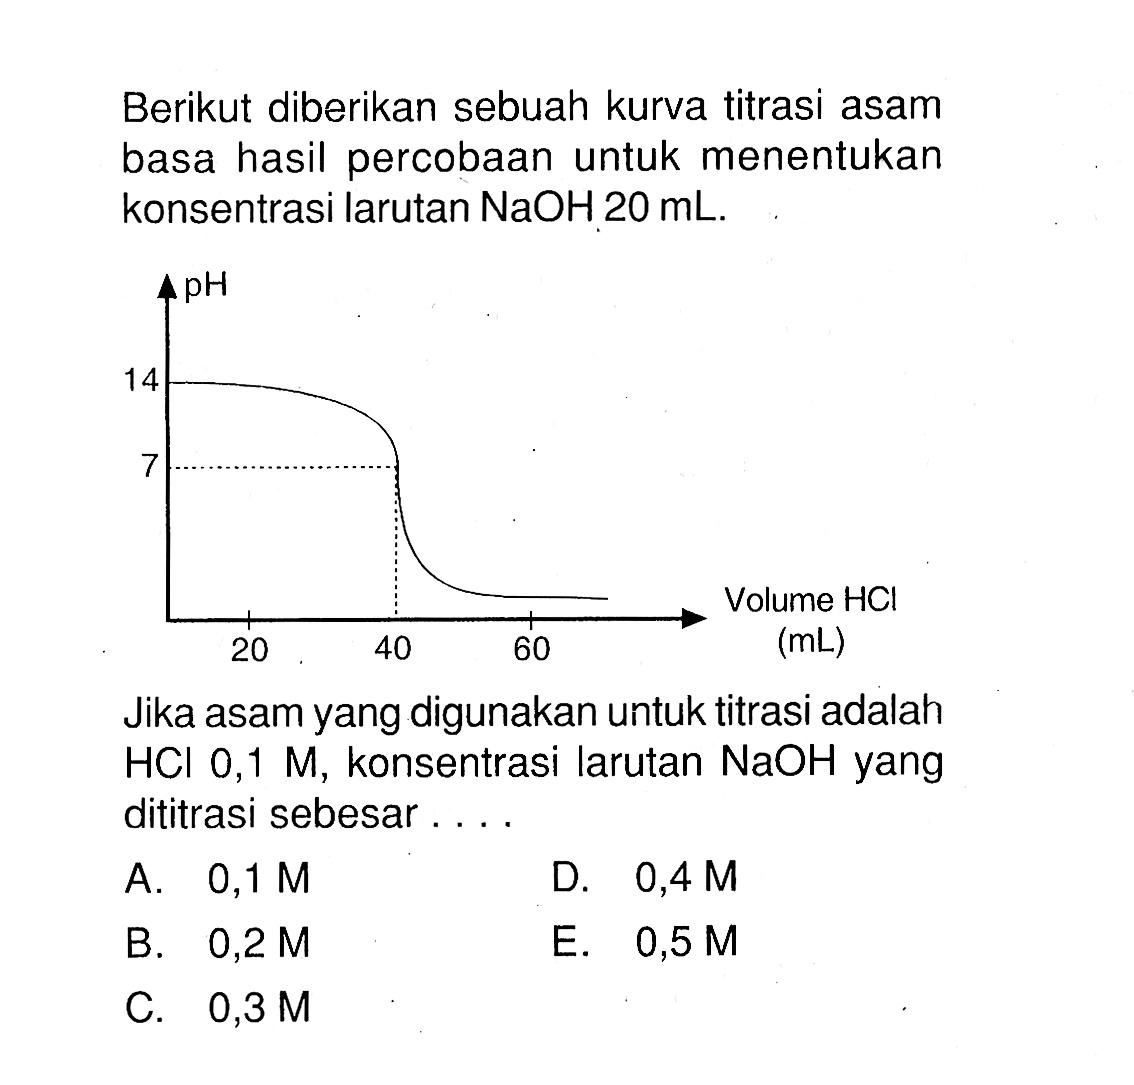 Berikut diberikan sebuah kurva titrasi asam basa hasil percobaan untuk menentukan konsentrasi larutan NaOH 20 mL .Jika asam yang digunakan untuk titrasi adalah HCl 0,1 M, konsentrasi larutan NaOH yang dititrasi sebesar....